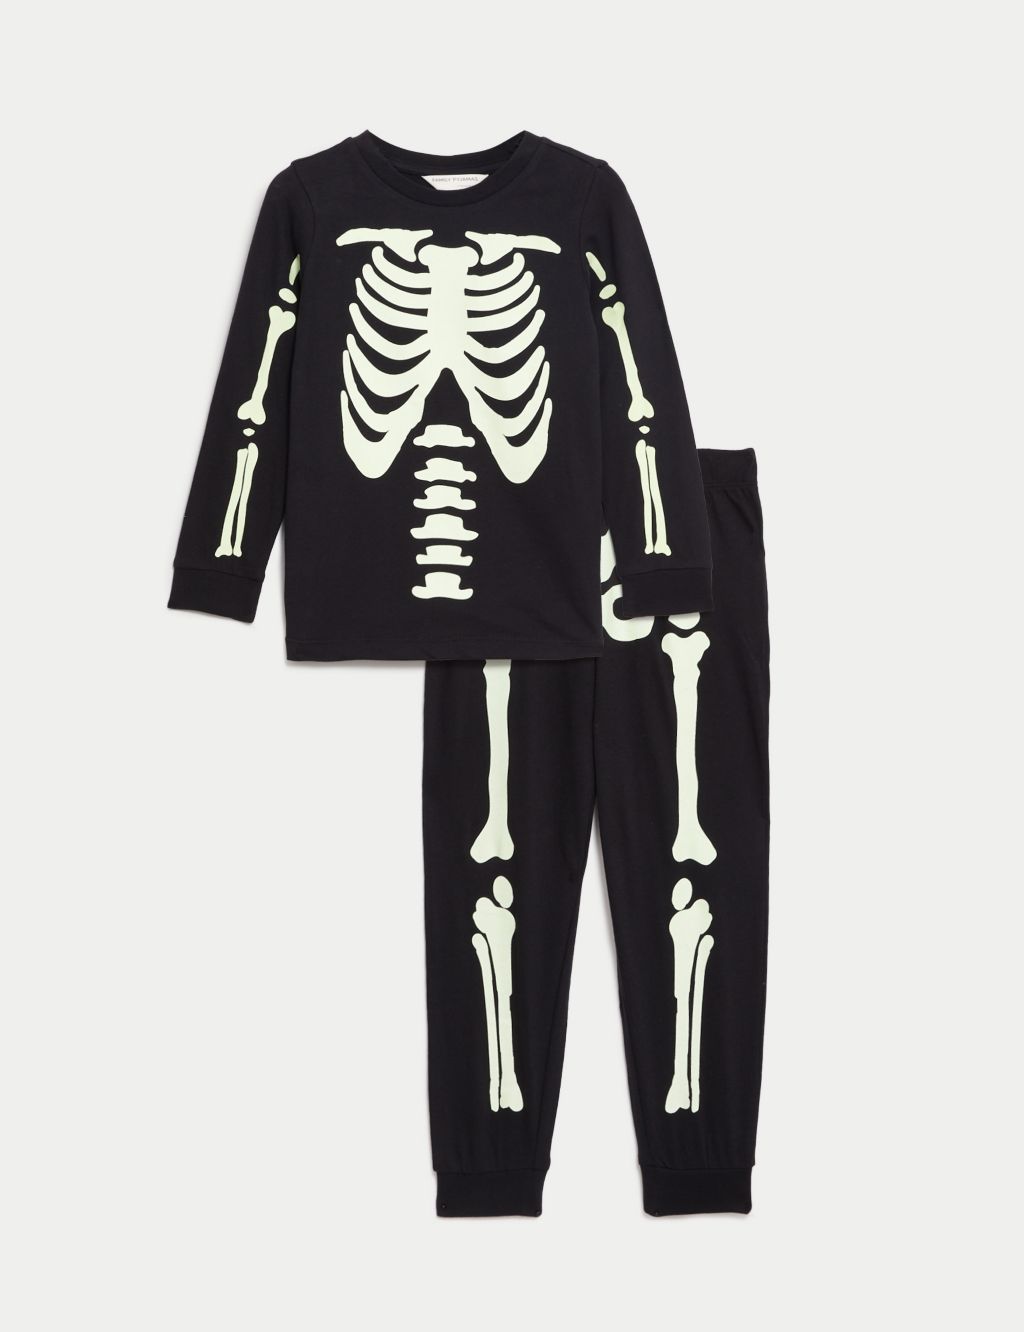 Kids' Glow in the Dark Halloween Skeleton Pyjamas (3-16 Yrs) image 2